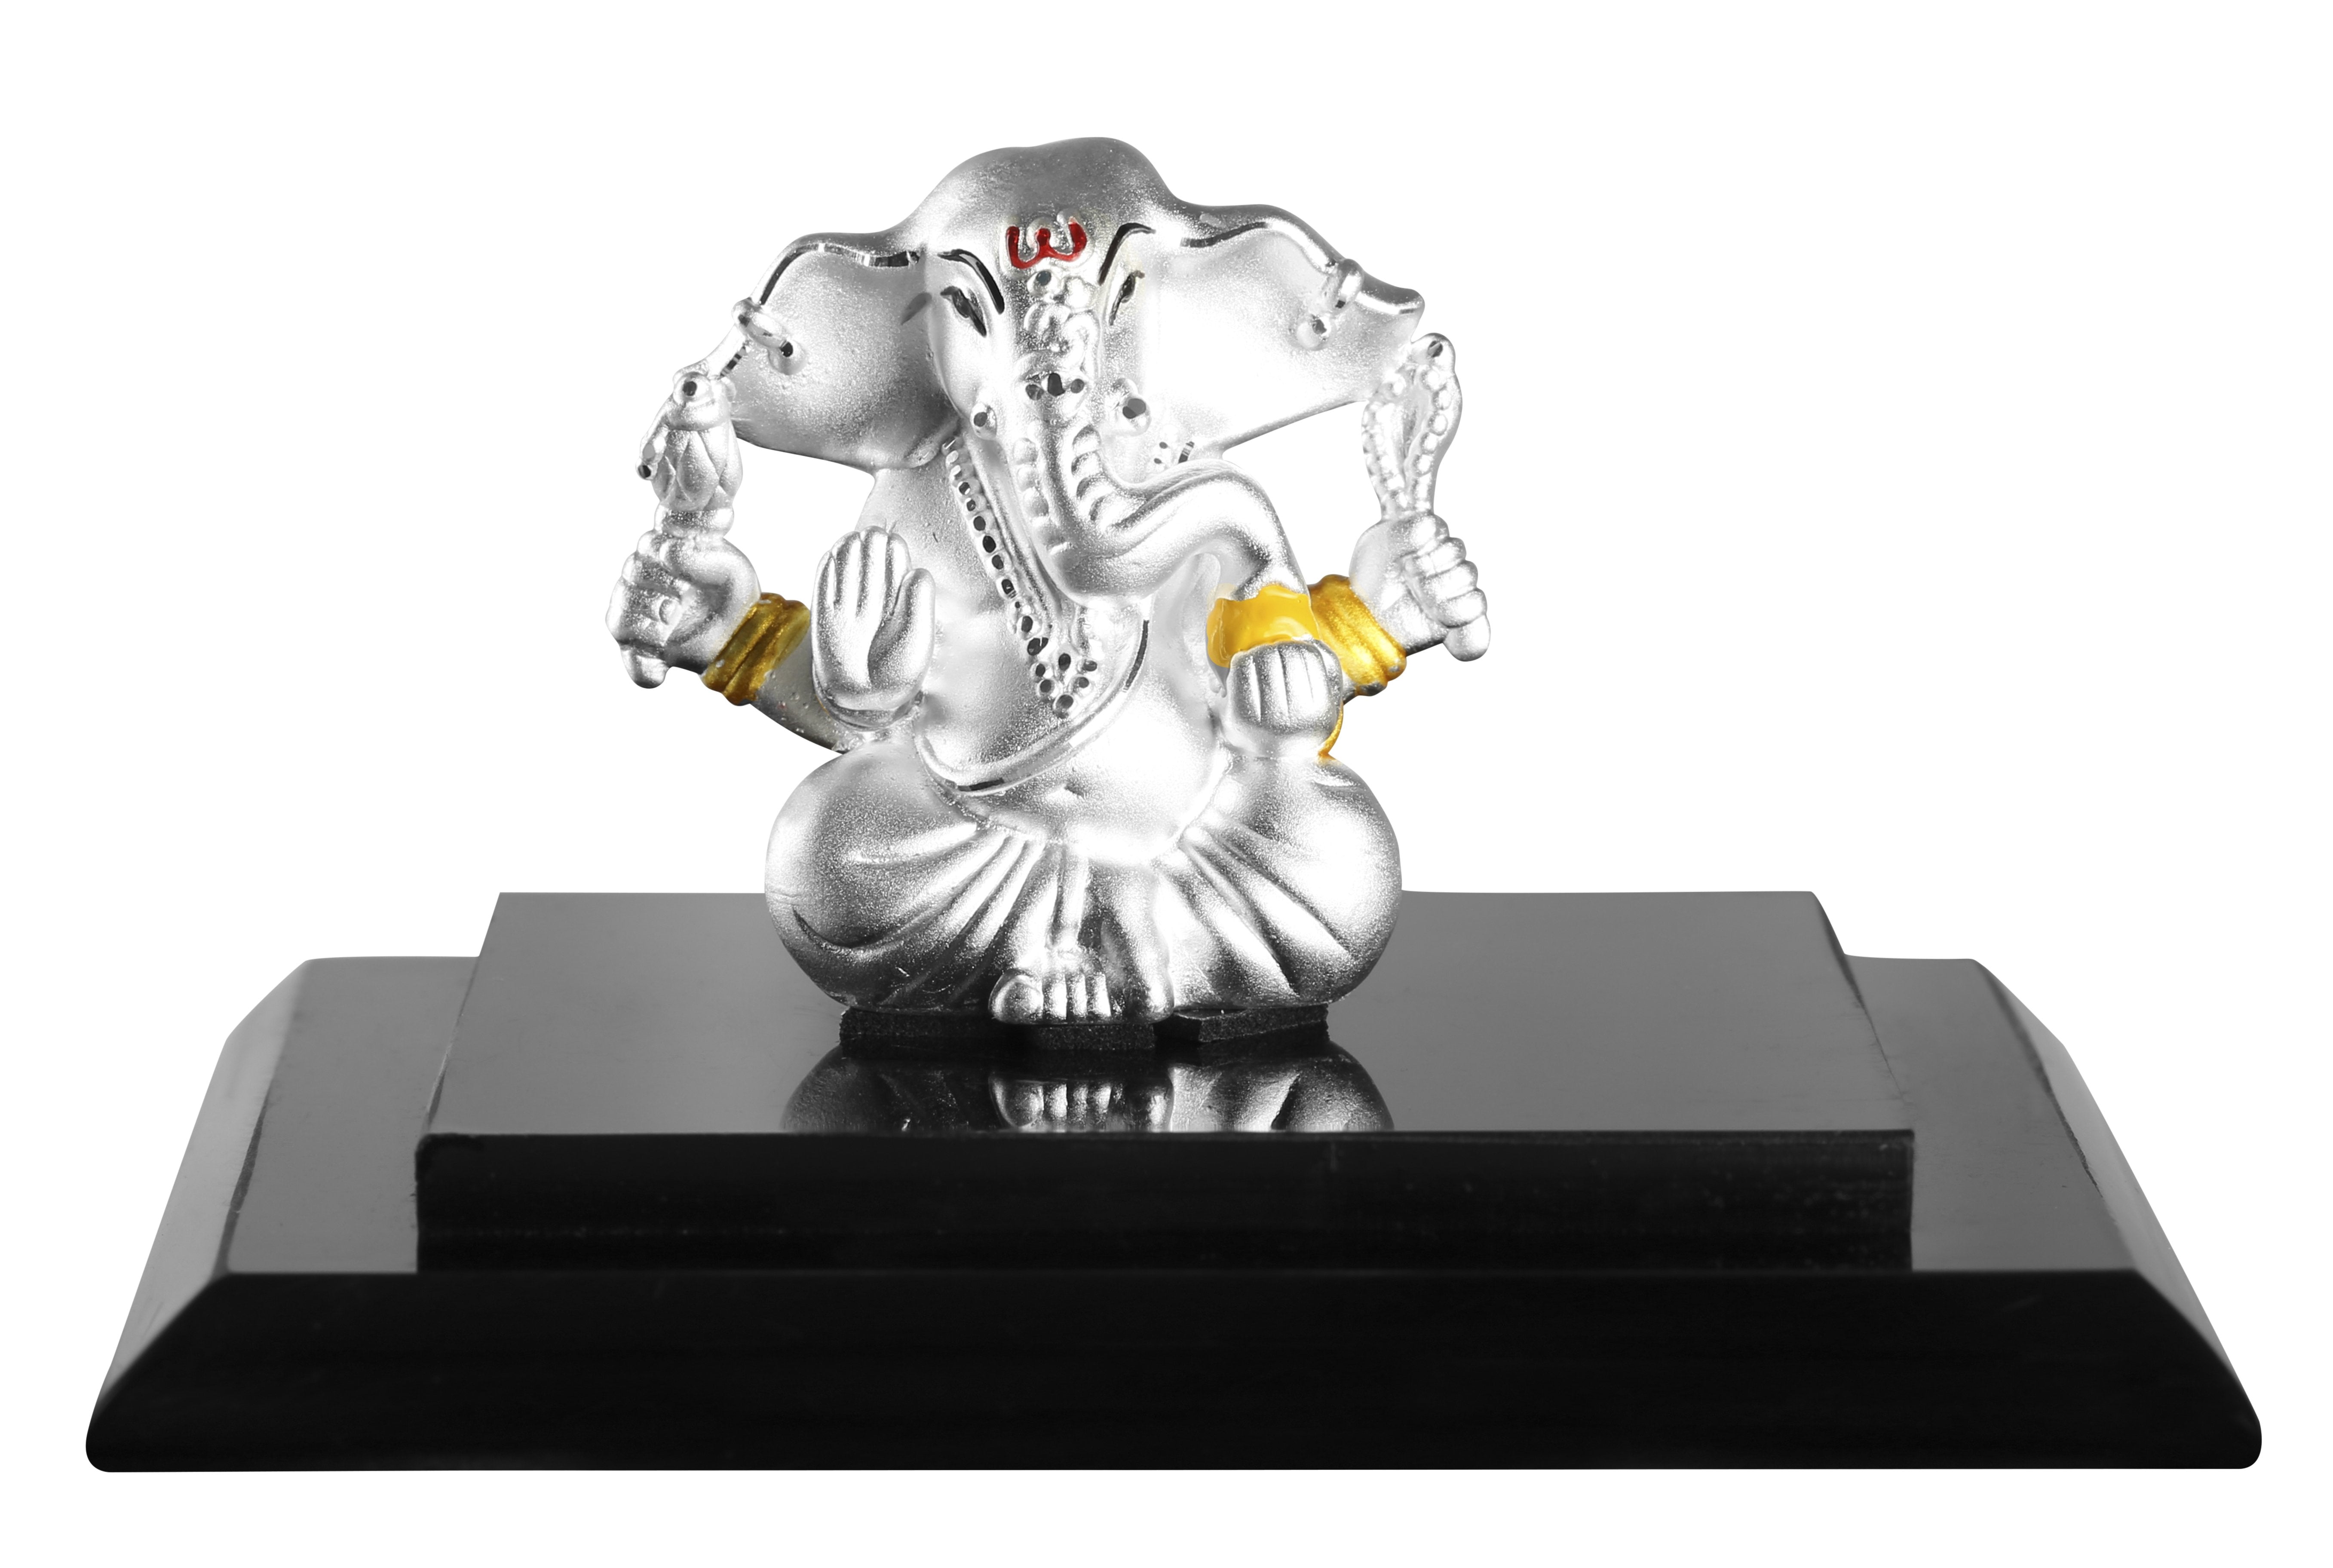 999 Pure Silver Ganesha Idol By Krysaliis Isvara - Krign_Ms27 Idols